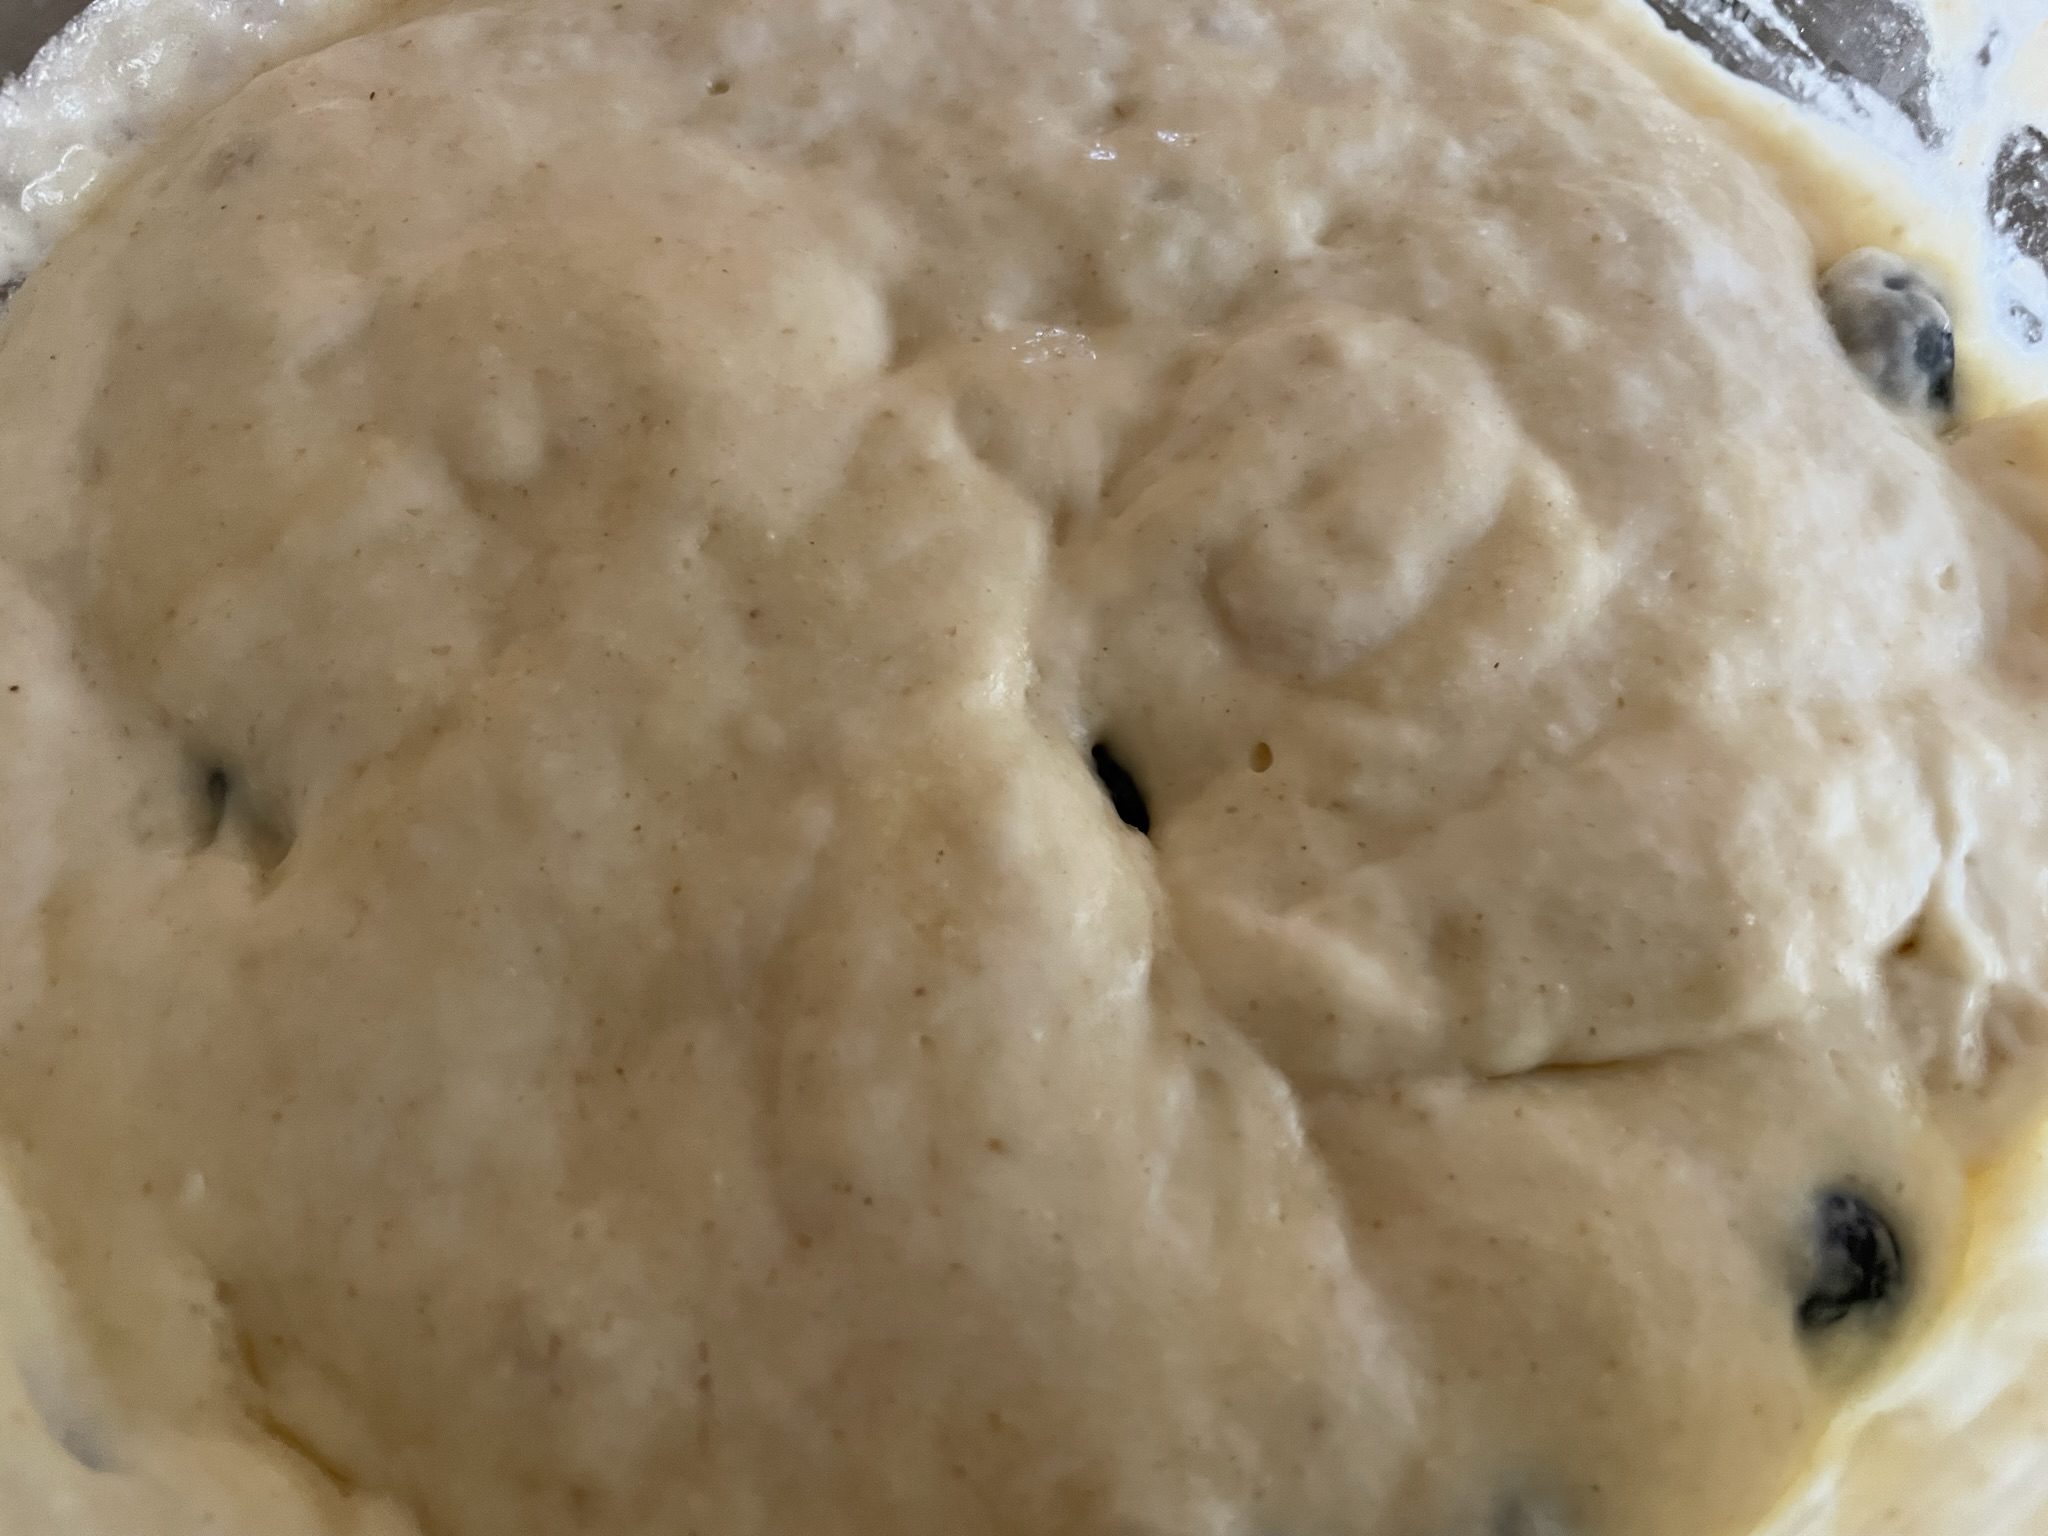 Blueberry pancake batter.